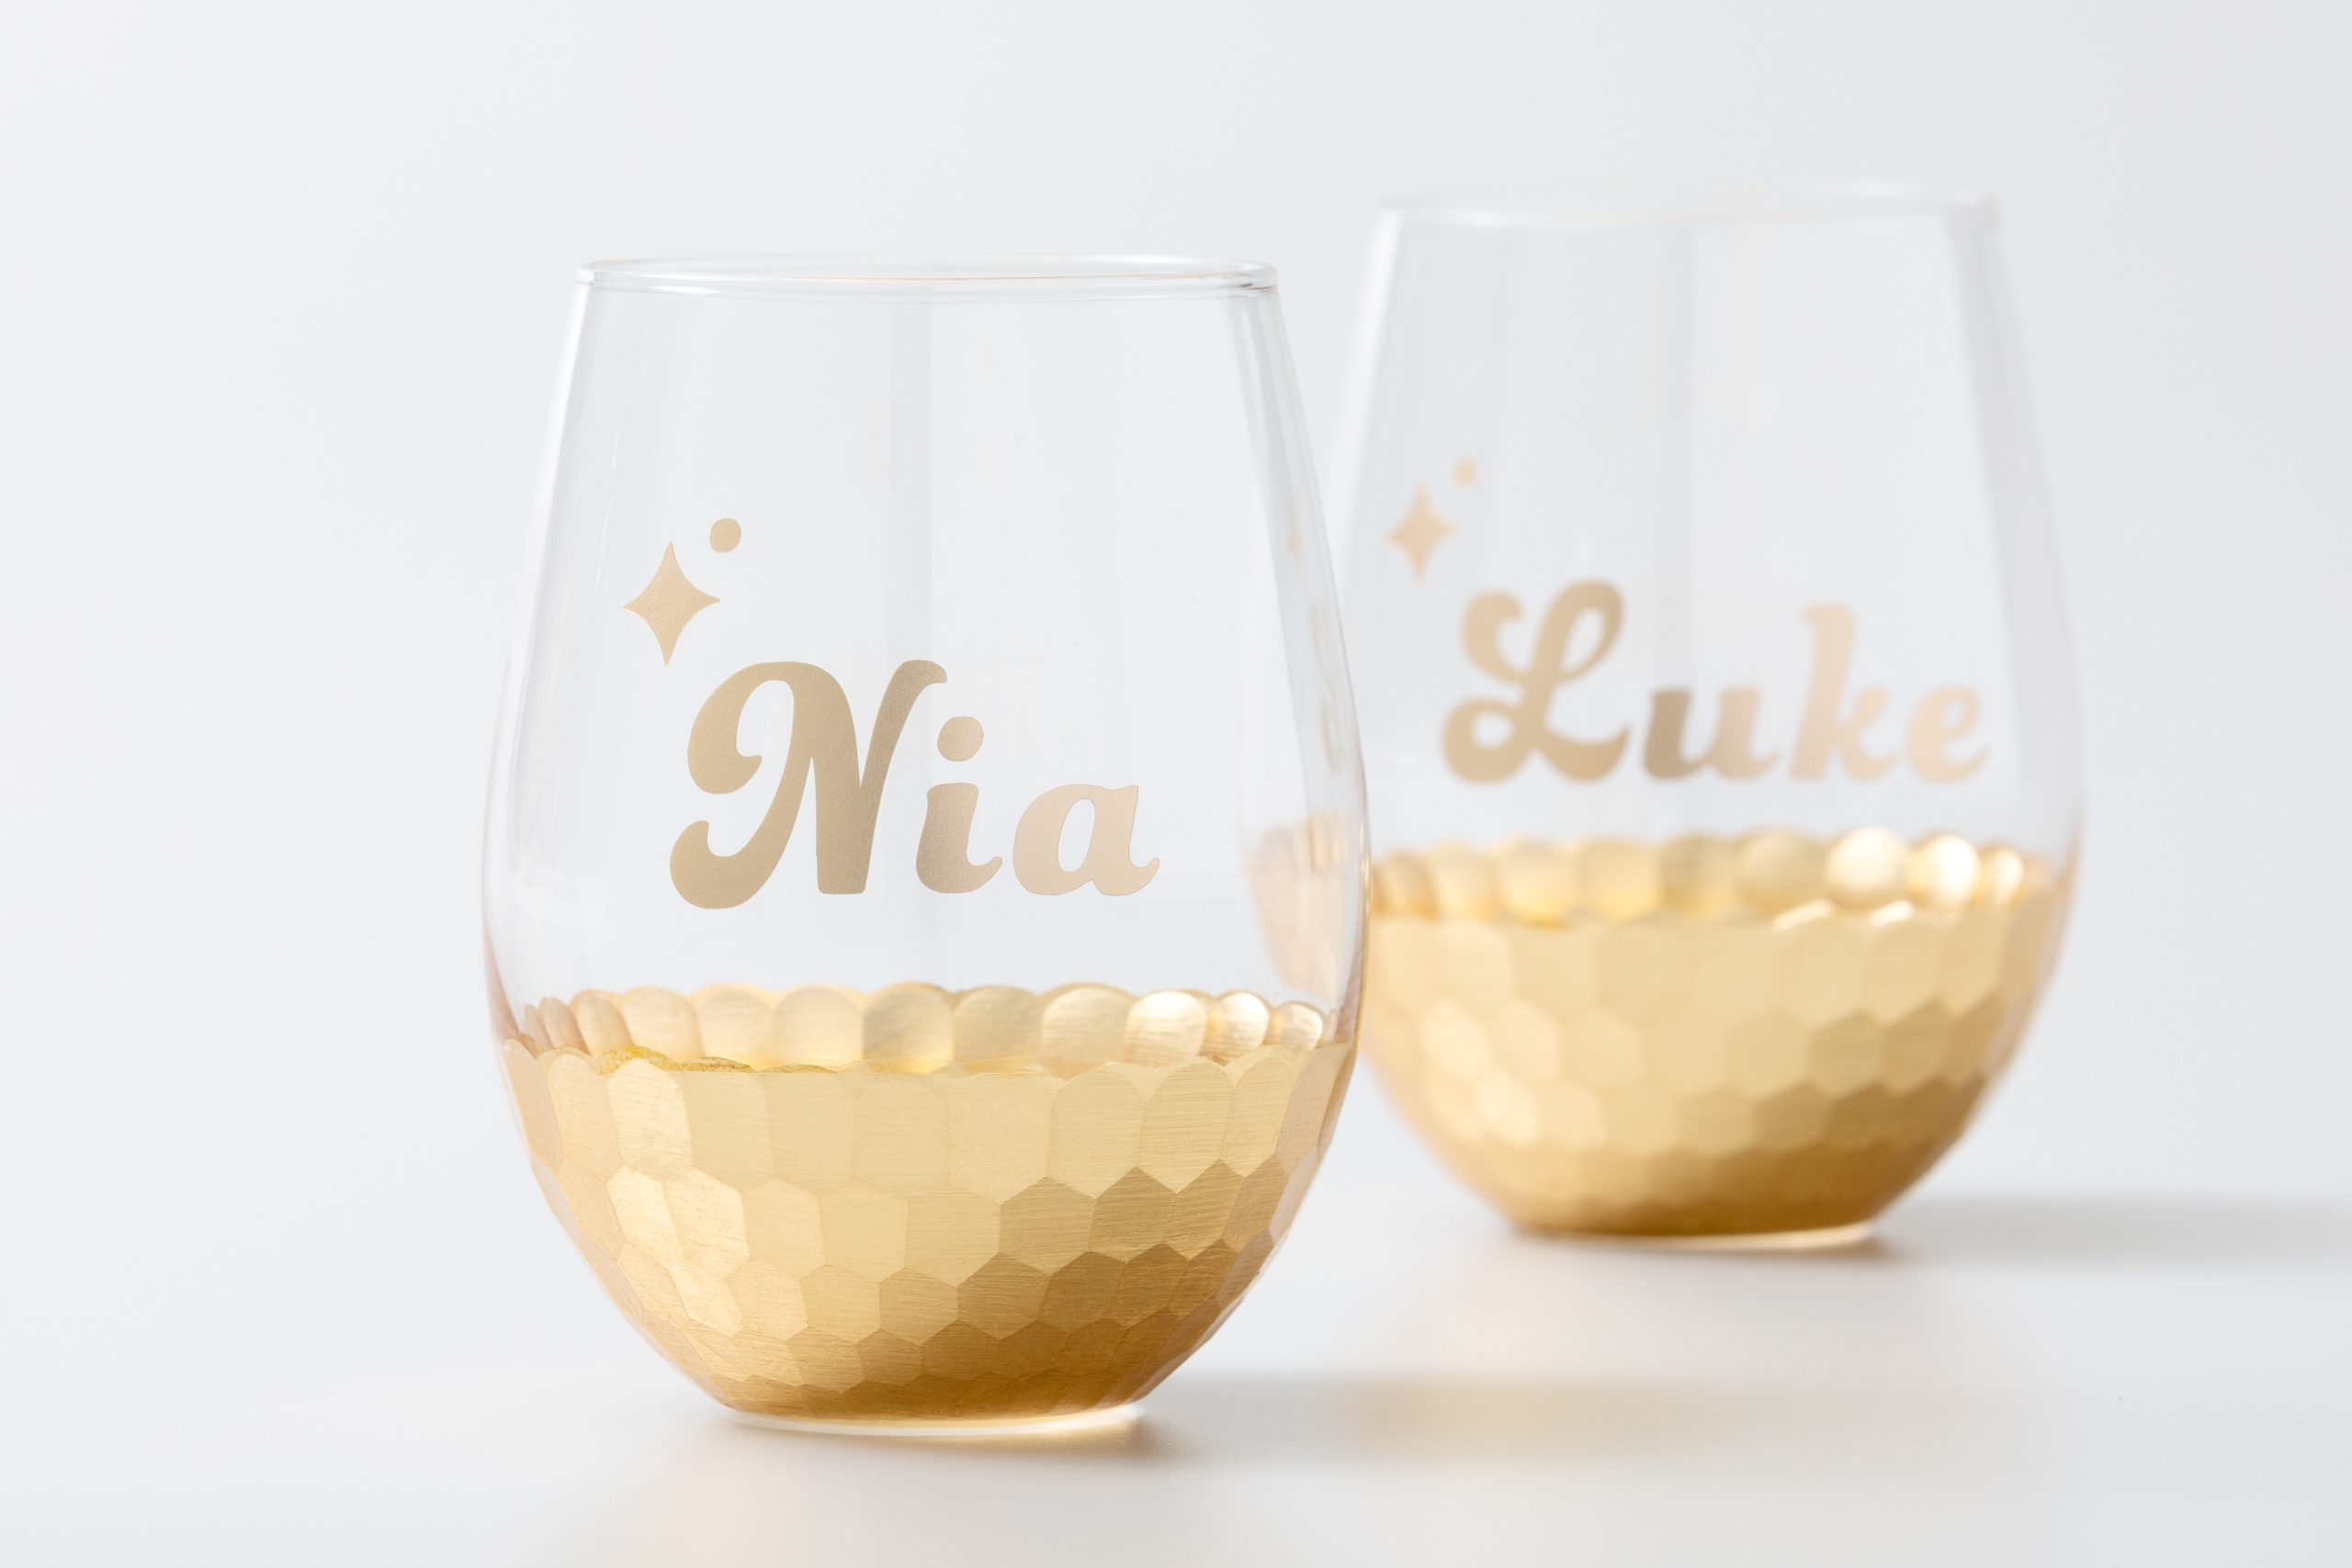 Personalised wine glass tumbler gift idea